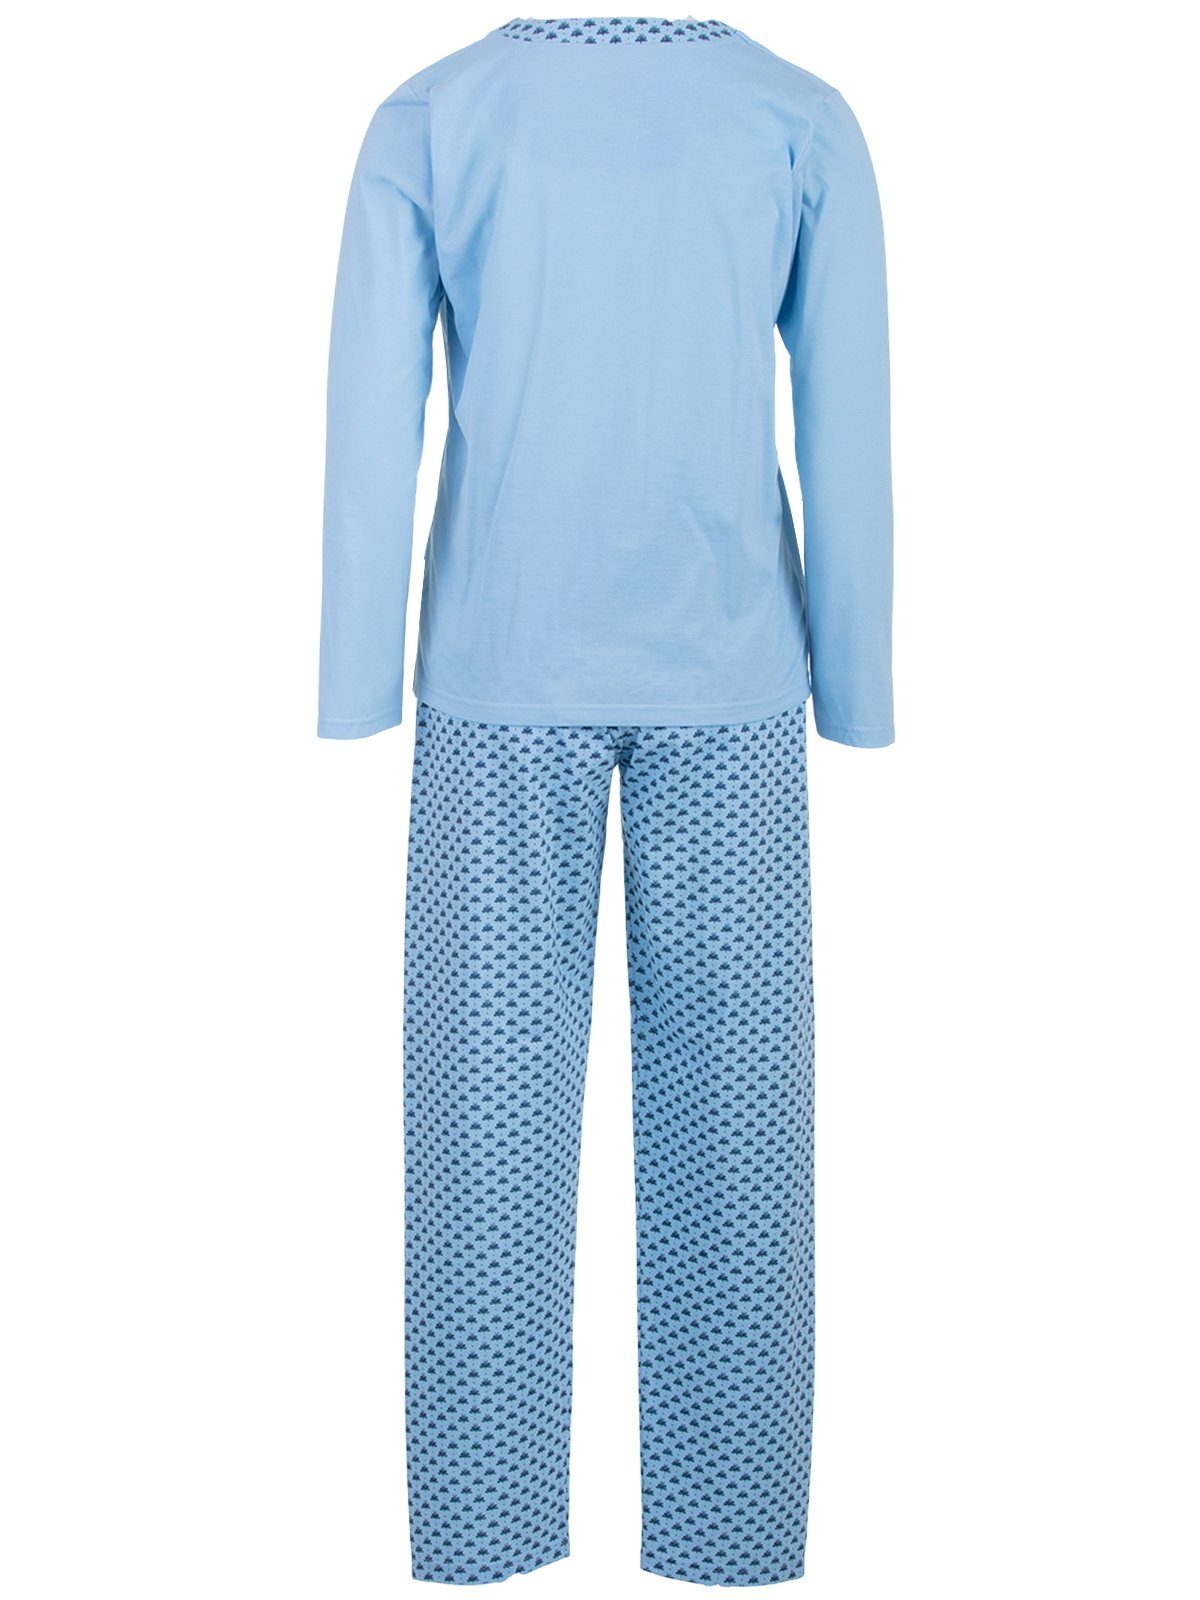 Set Blumen Pyjama blau zeitlos - Langarm Borte Schlafanzug